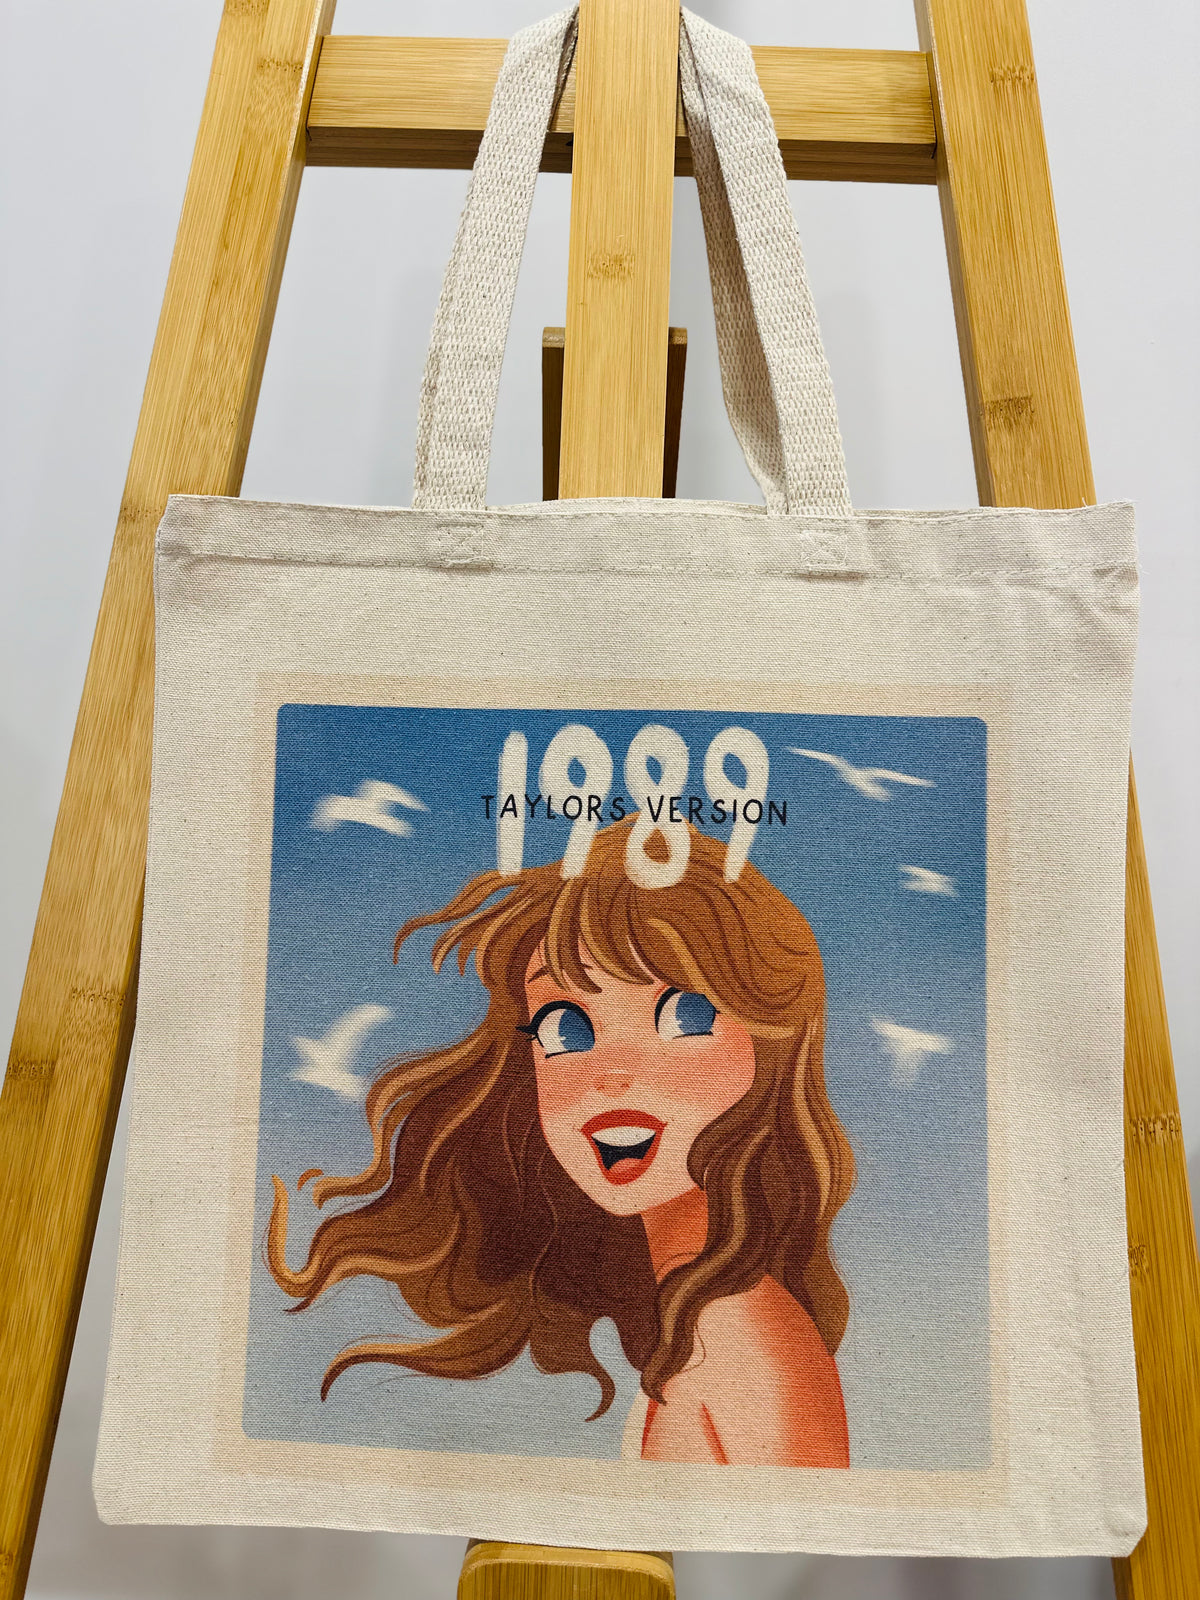 1989 Taylor's Version Tote Bag